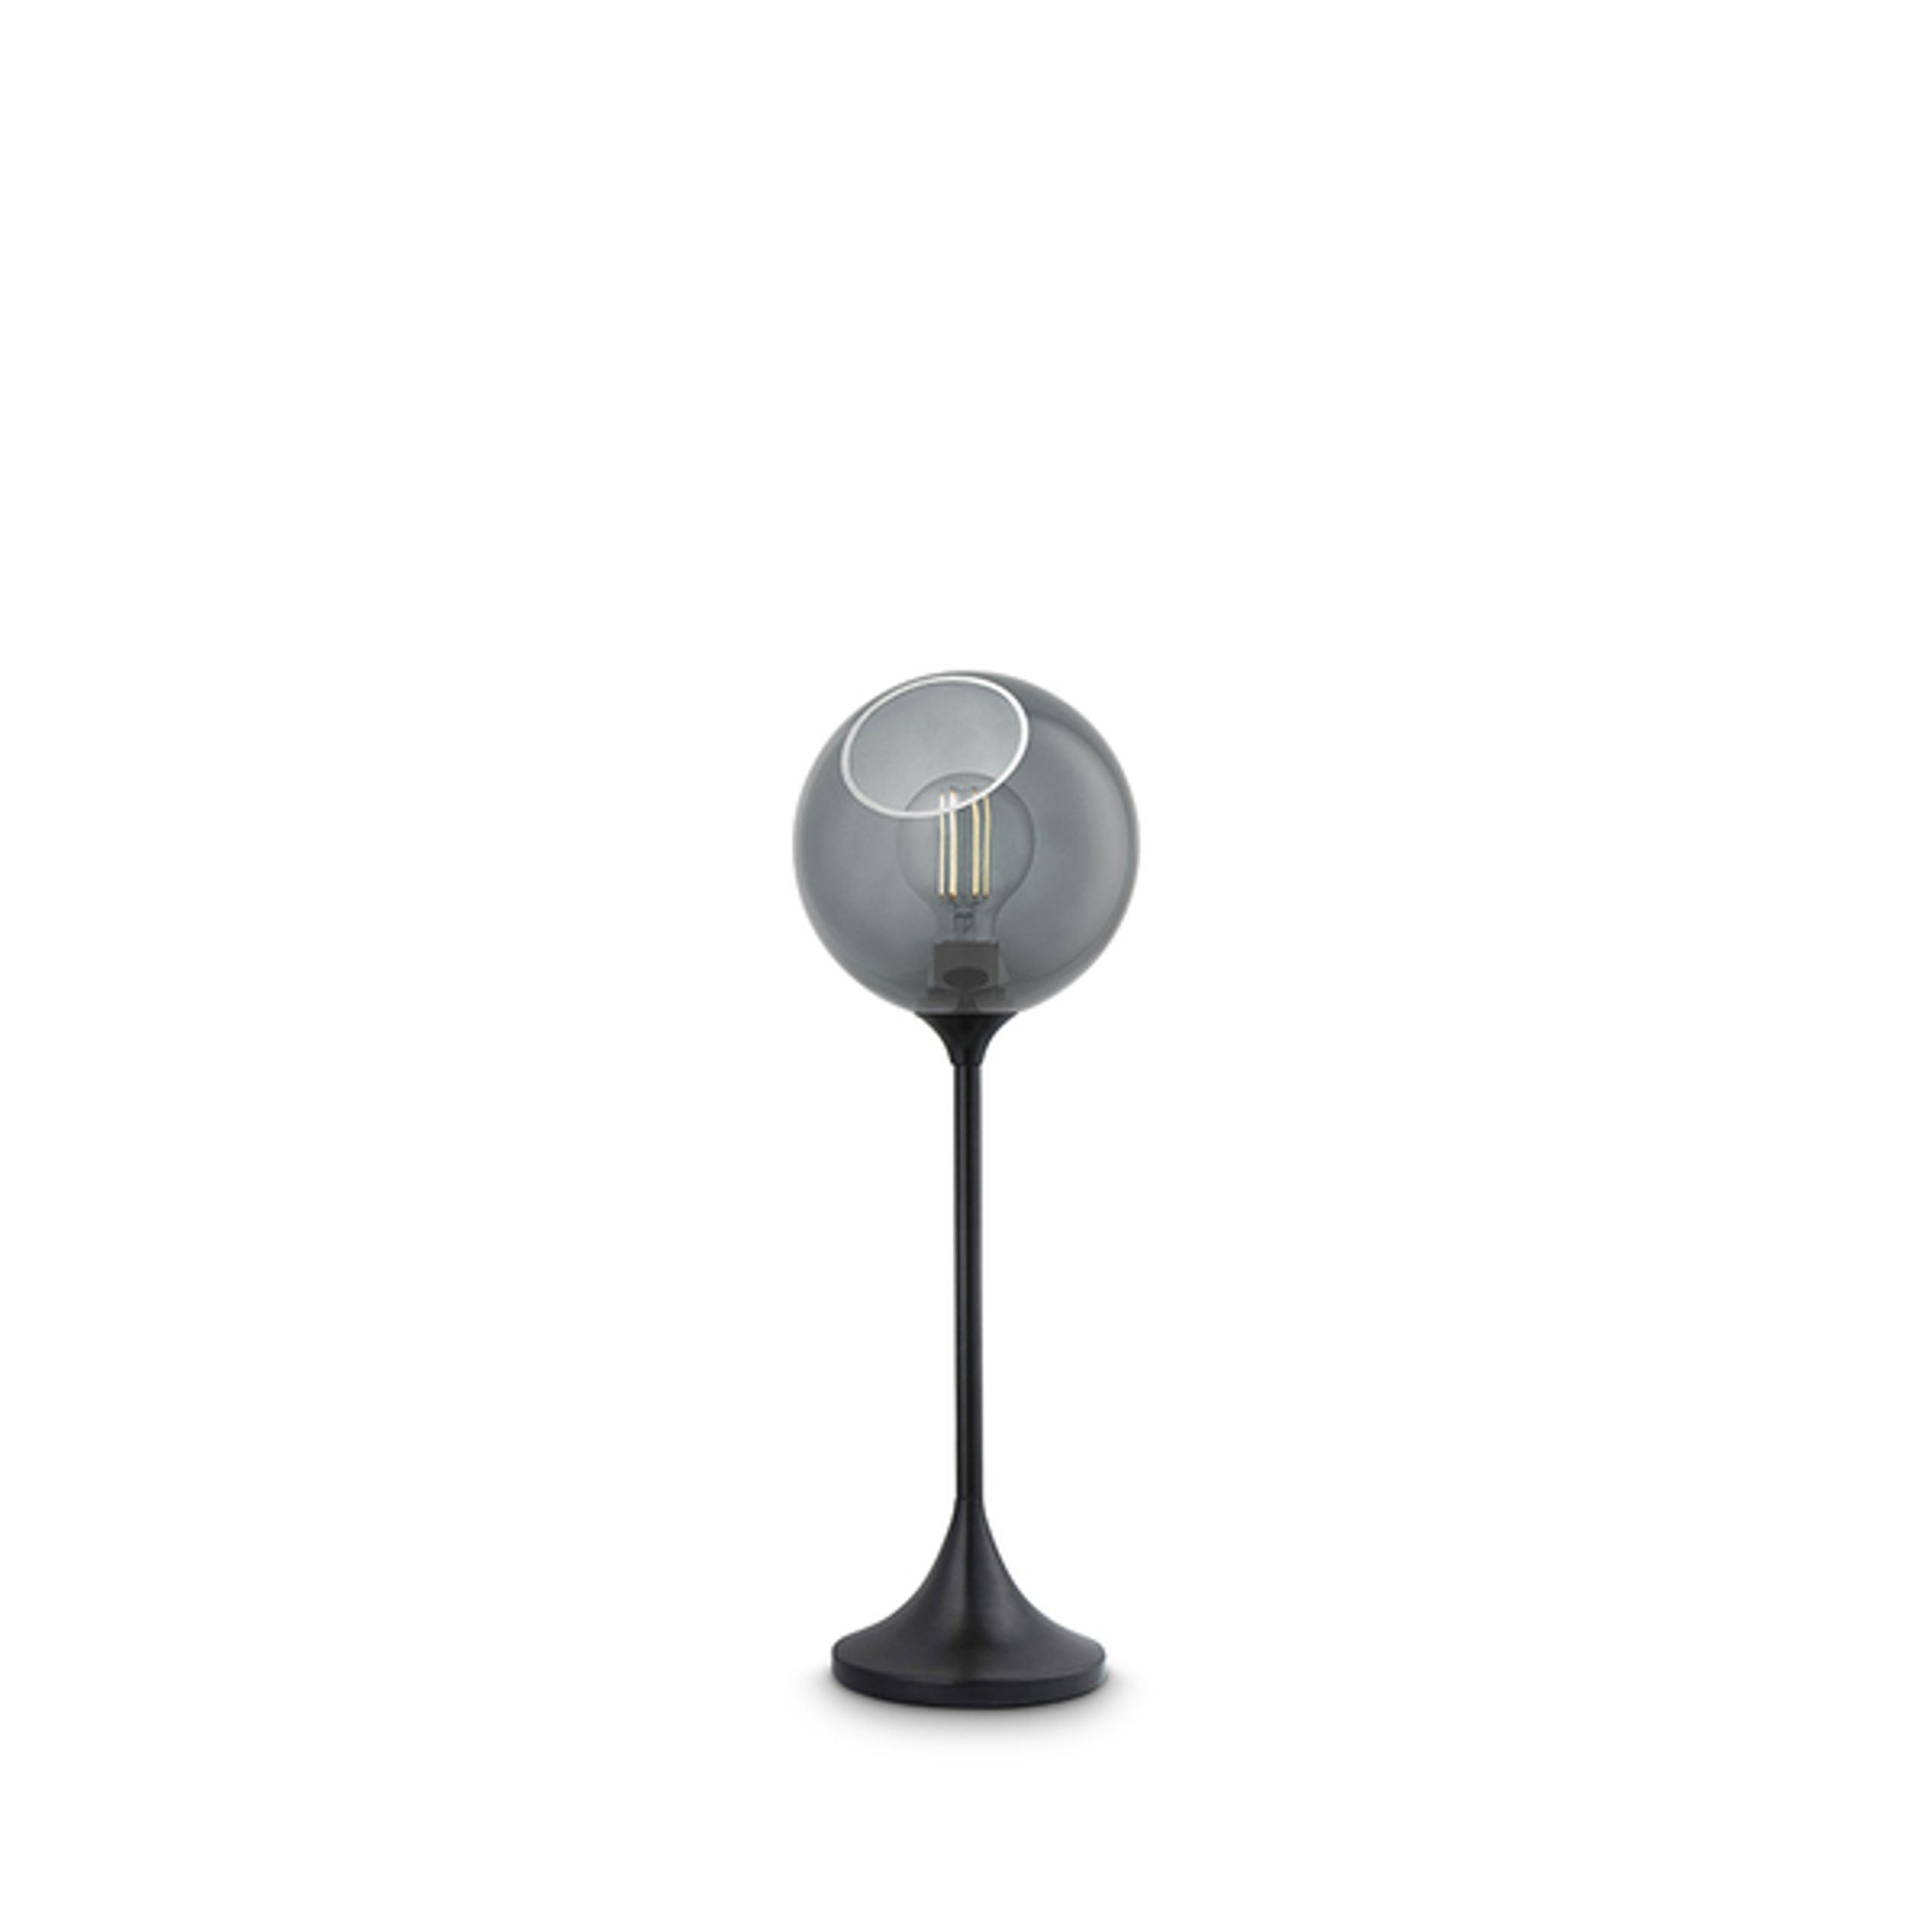 Design By Us - Tischlampe - Ballroom Table Lamp - Smoke/Silver